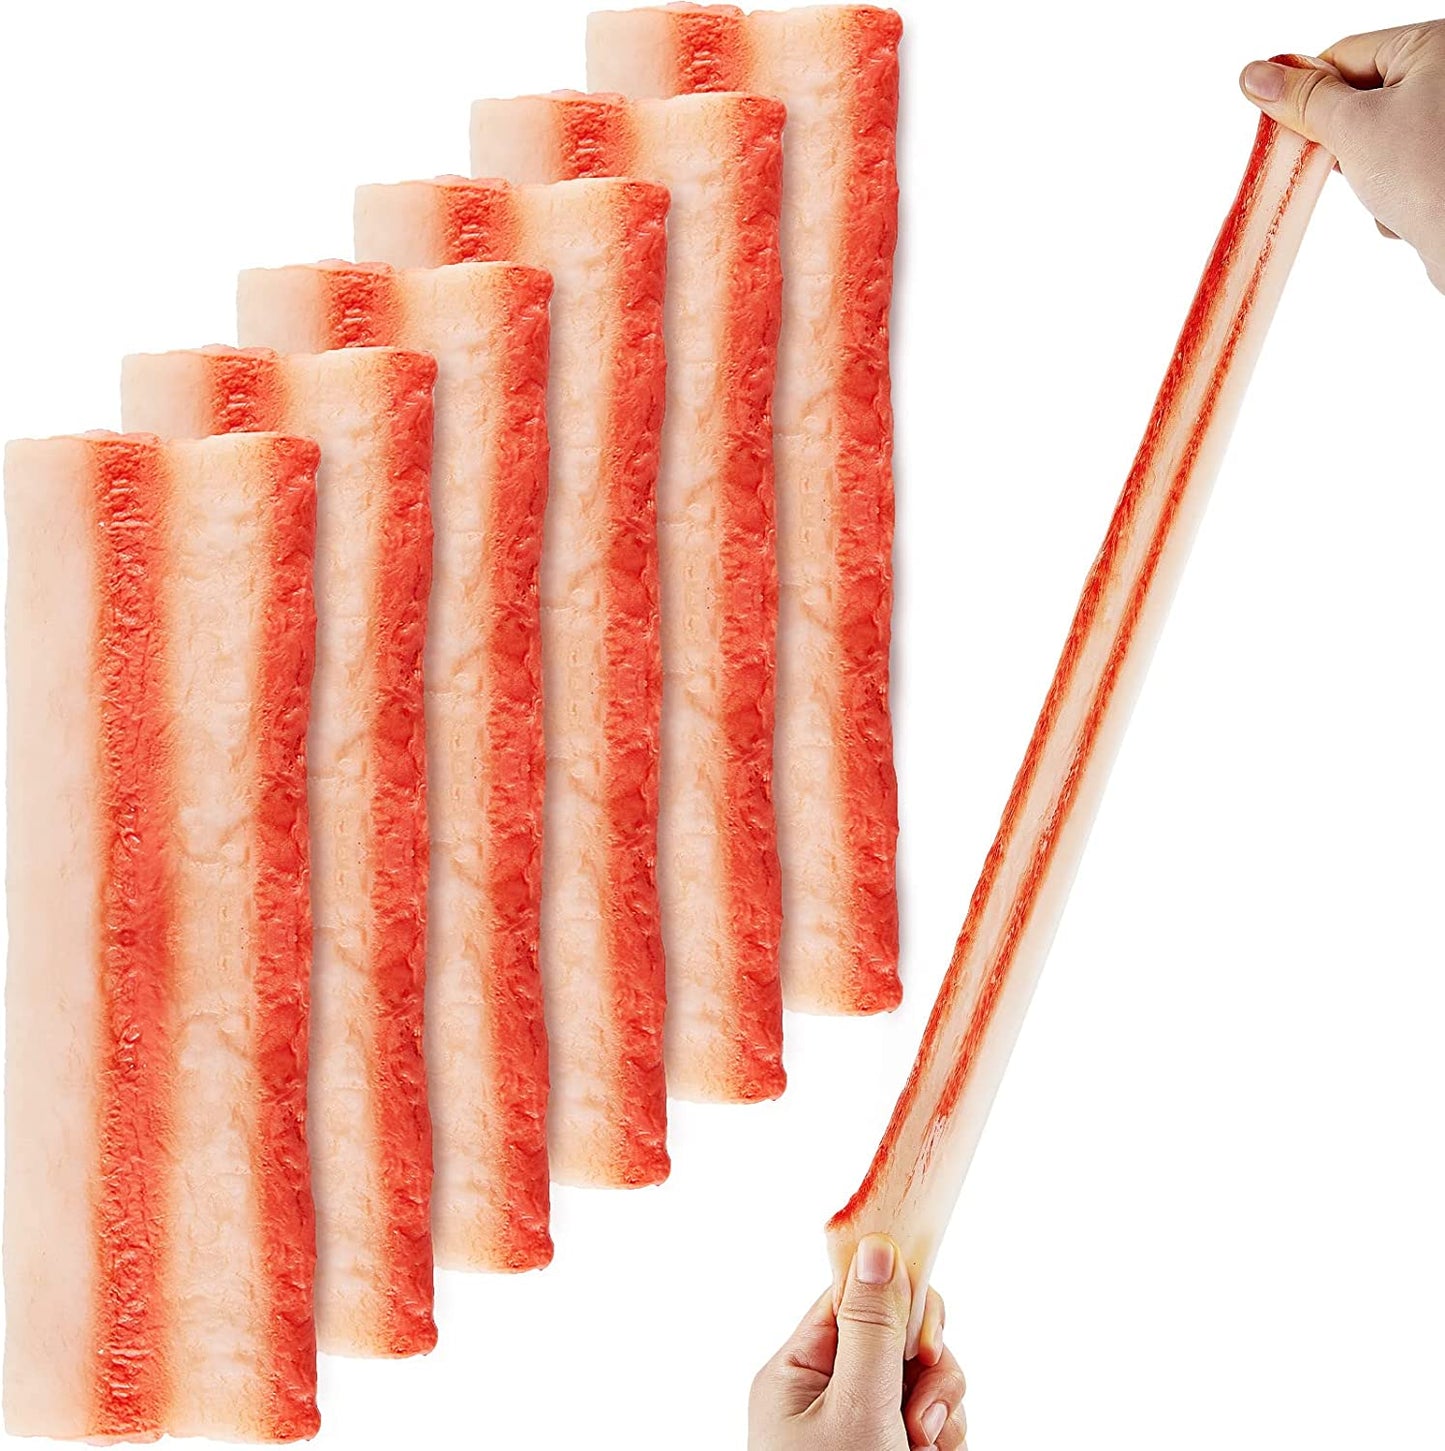 Bacon Fidget Toy (3pcs) Stretchy Faux Bacon